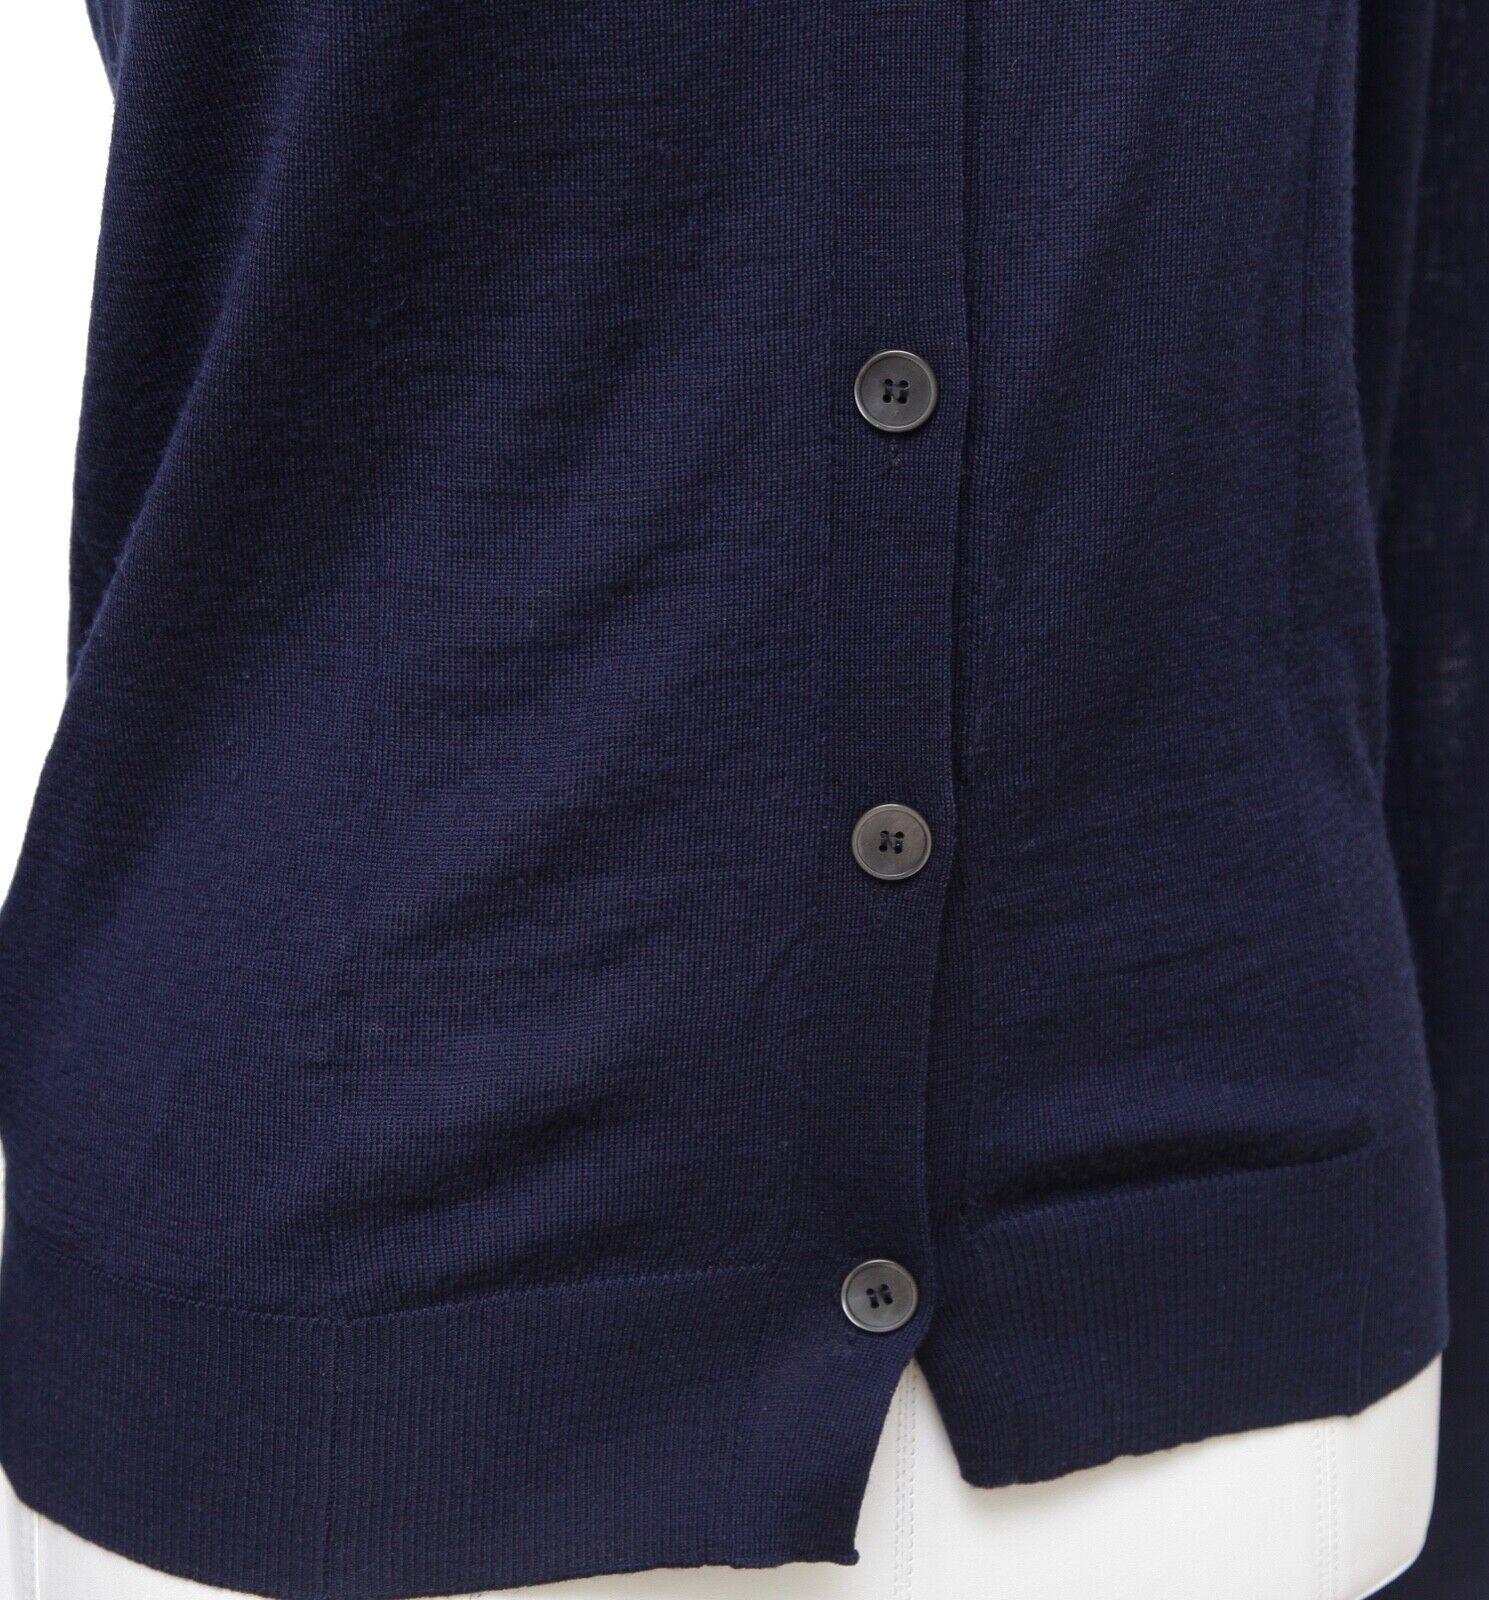 Women's MIU MIU Cardigan Sweater Knit Top Wool Navy Blue V-Neck Long Sleeve Sz 36